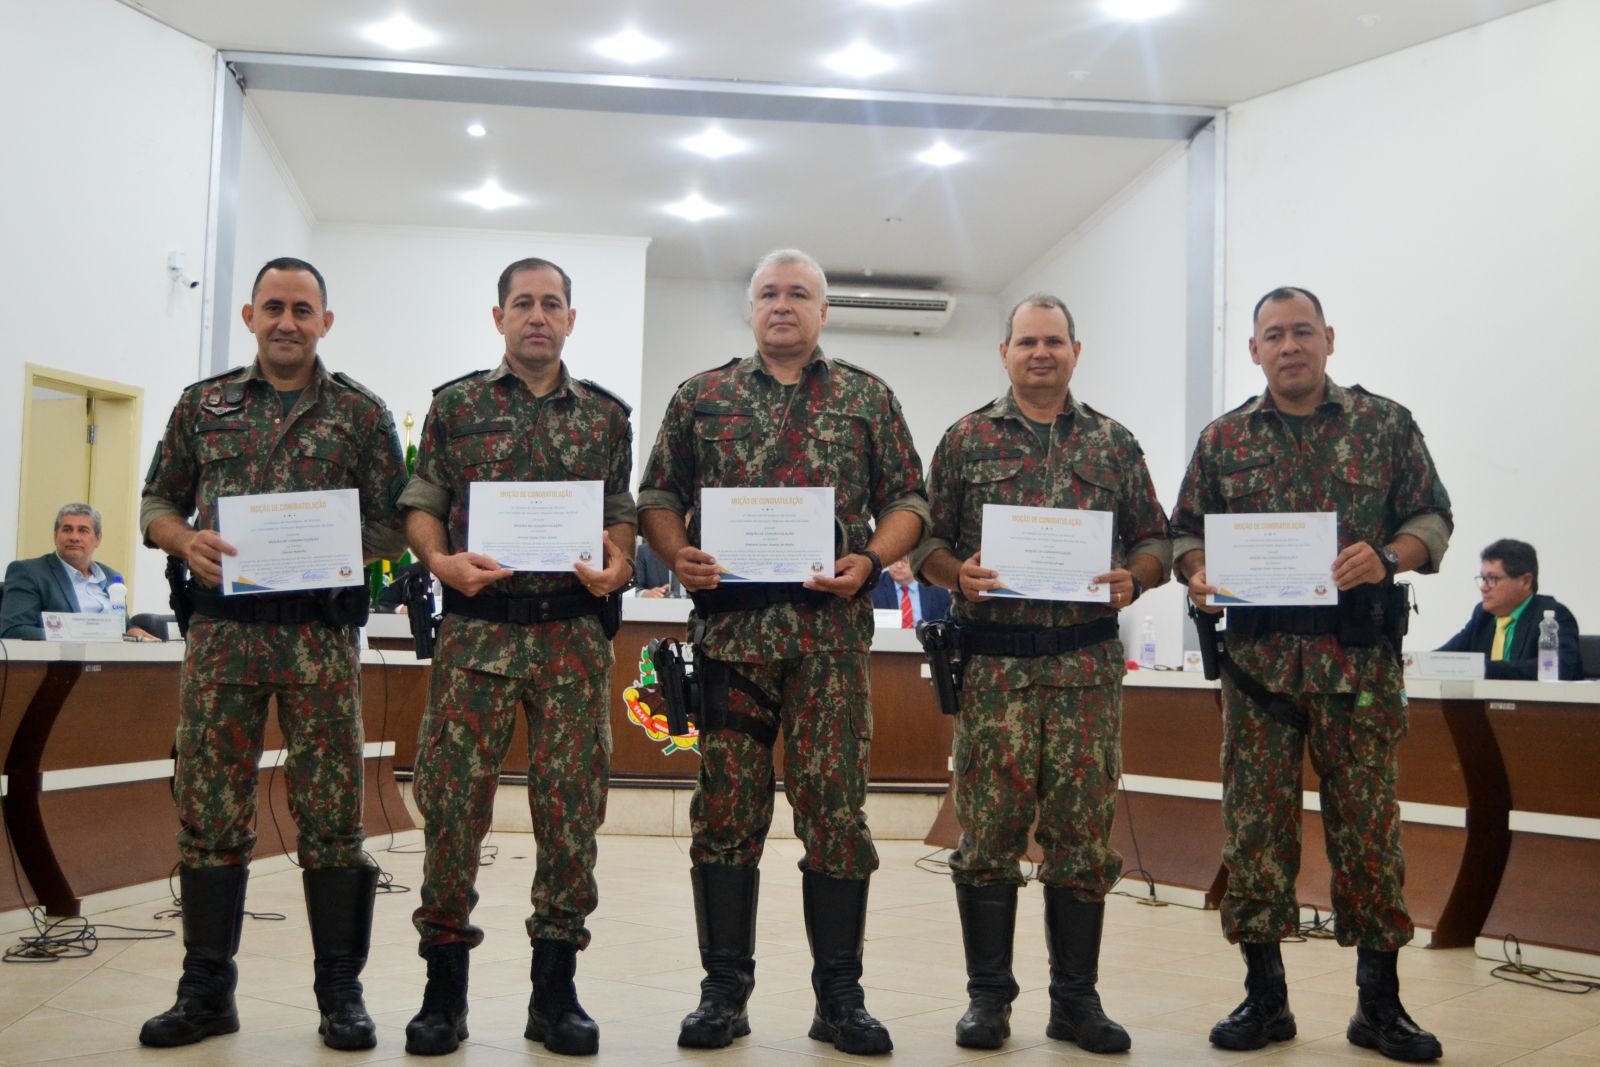 1° Tenente Comandante Ismael Carlos Frais, 2° Sargento PM Rabello, 2° Sargento PM Braga, 2° Sargento PM Júnior e 3° Sargento PM Augusto. 